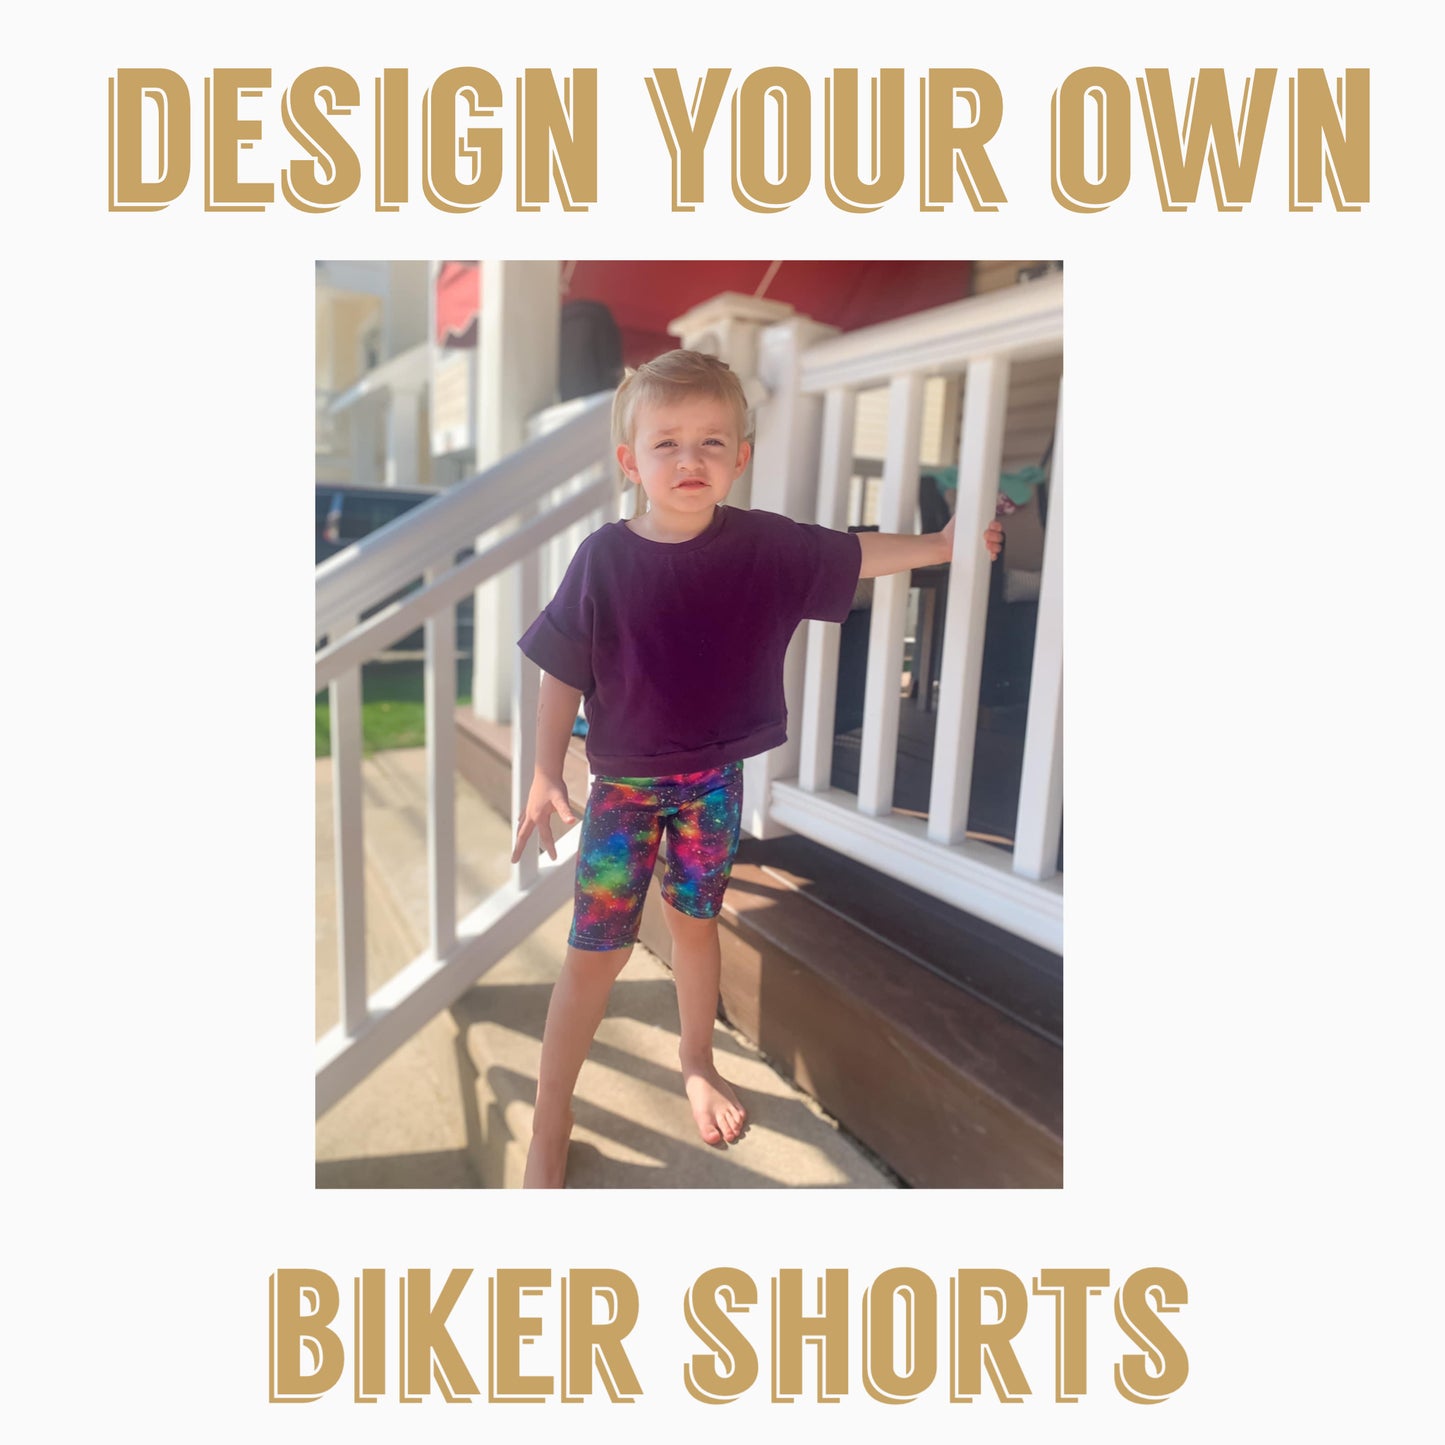 Design your own| biker shorts